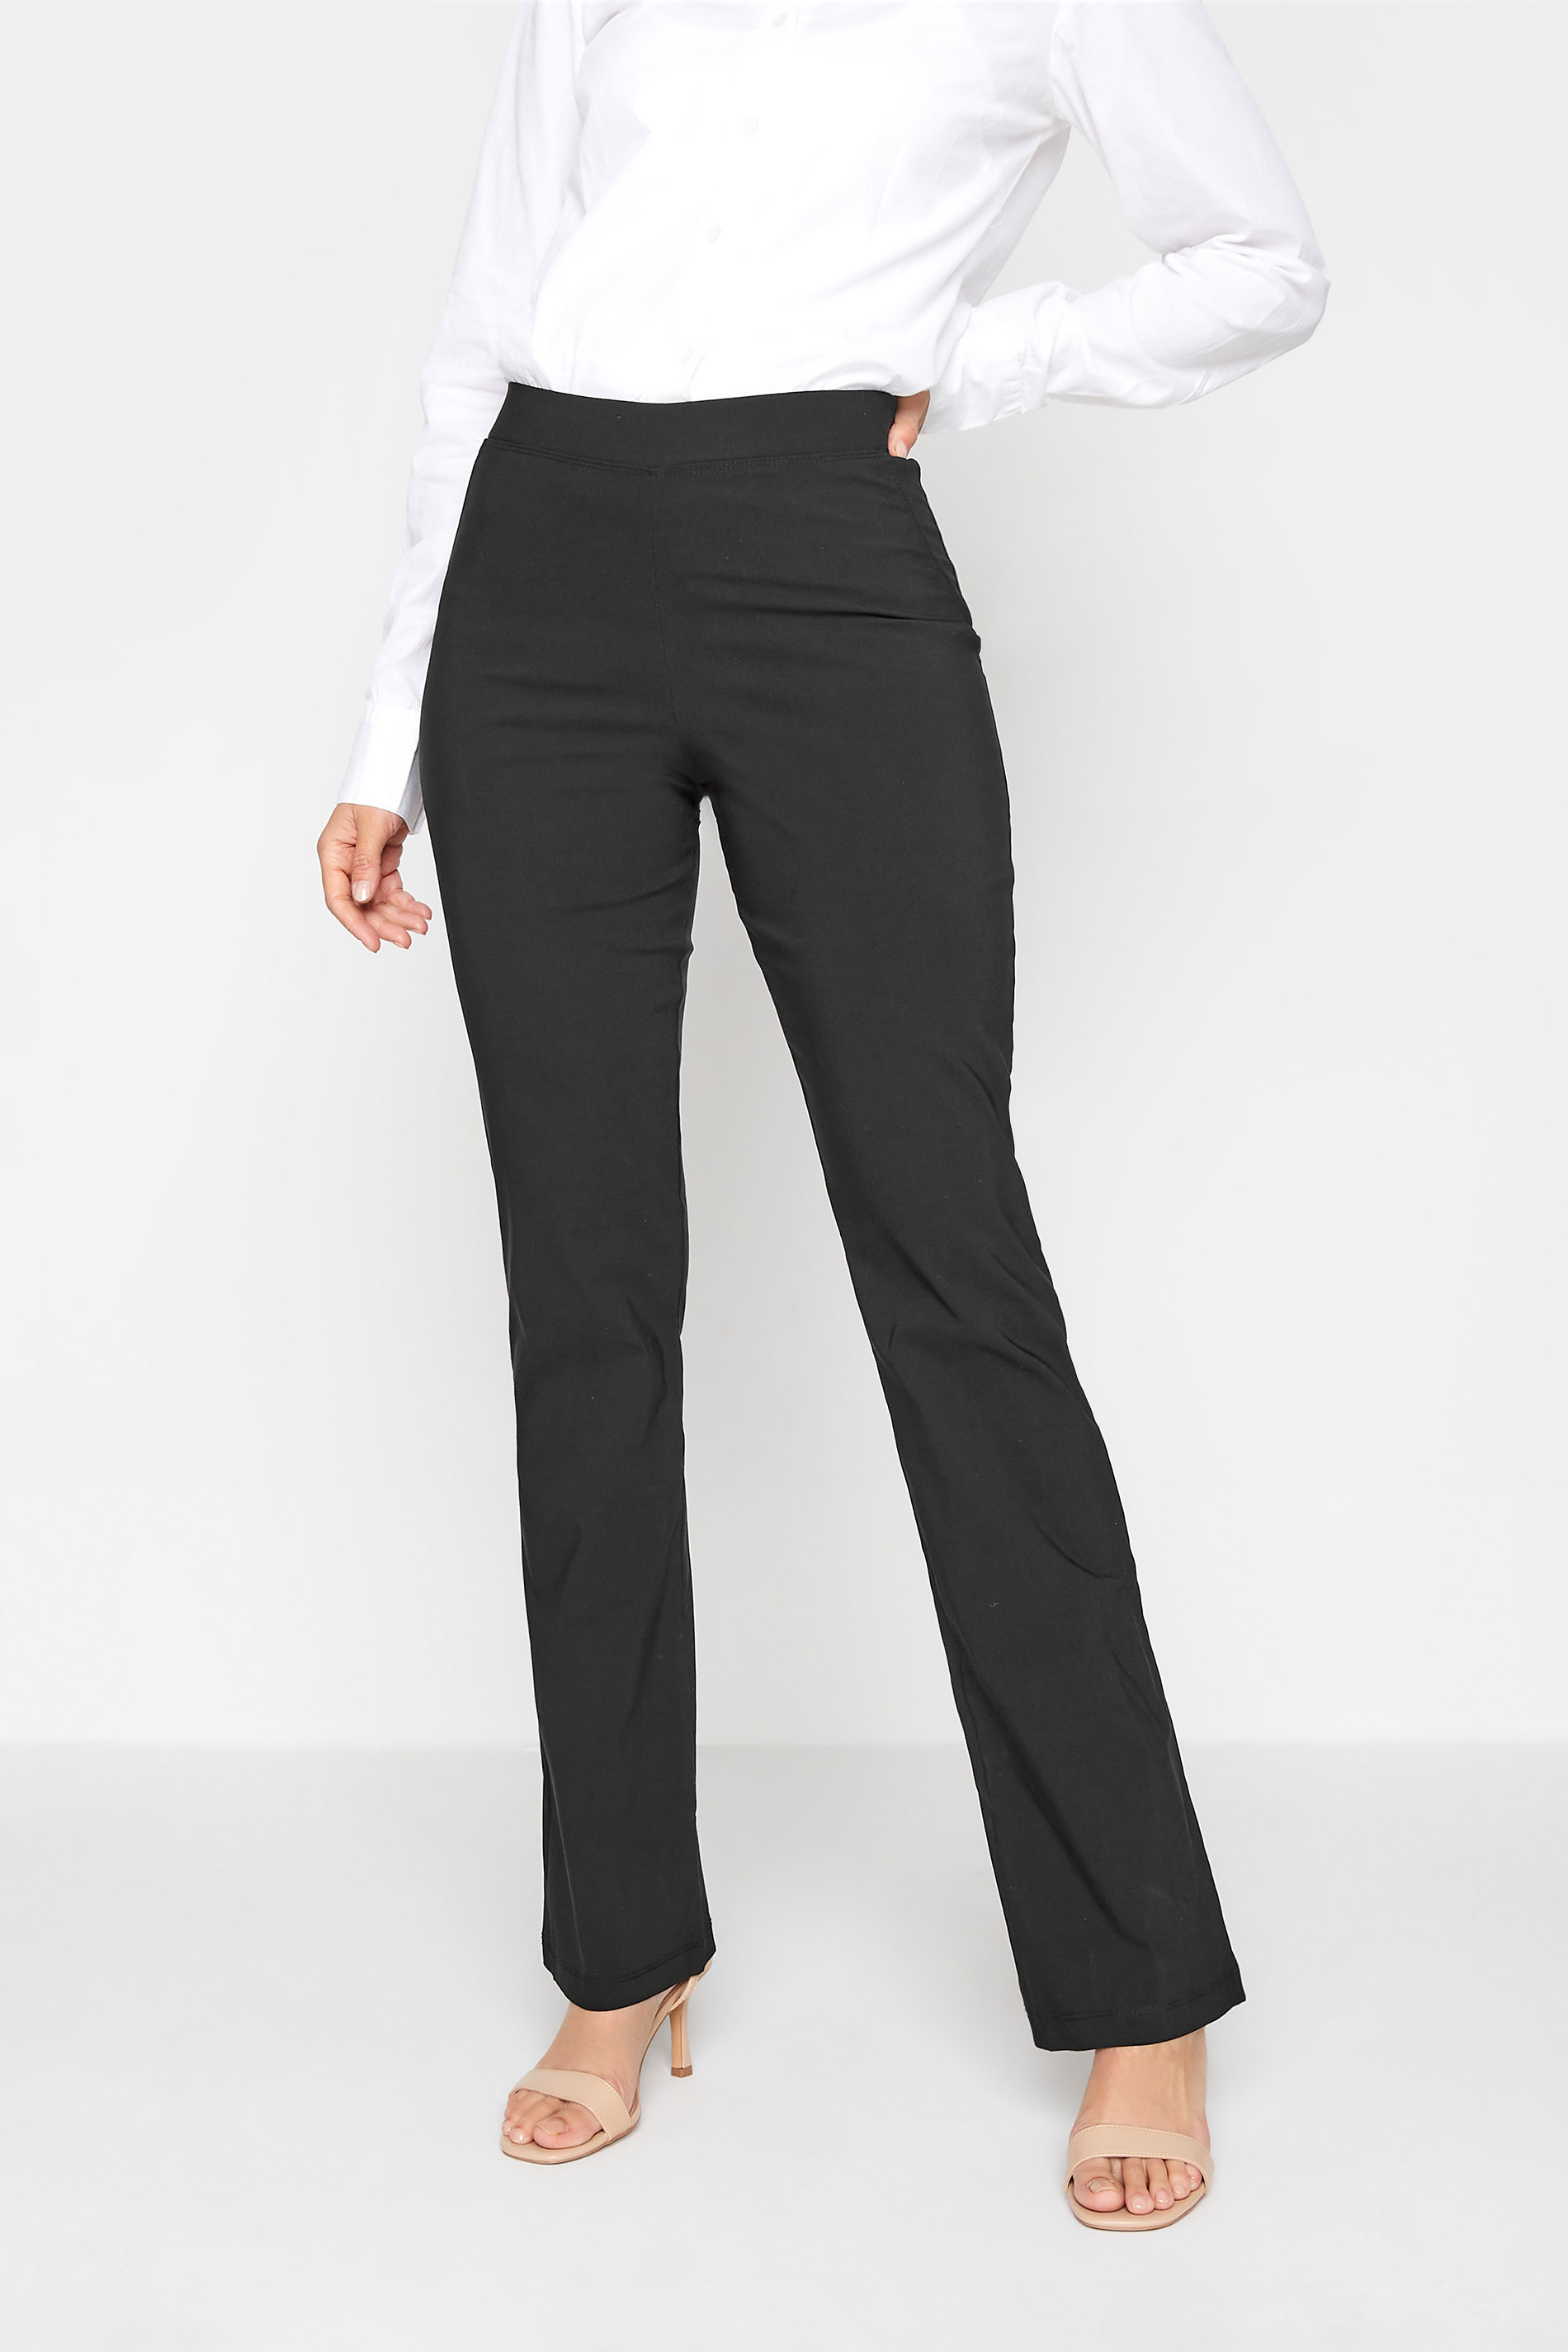 Tall Women's LTS Black Stretch Bootcut Trousers | Long Tall Sally 1